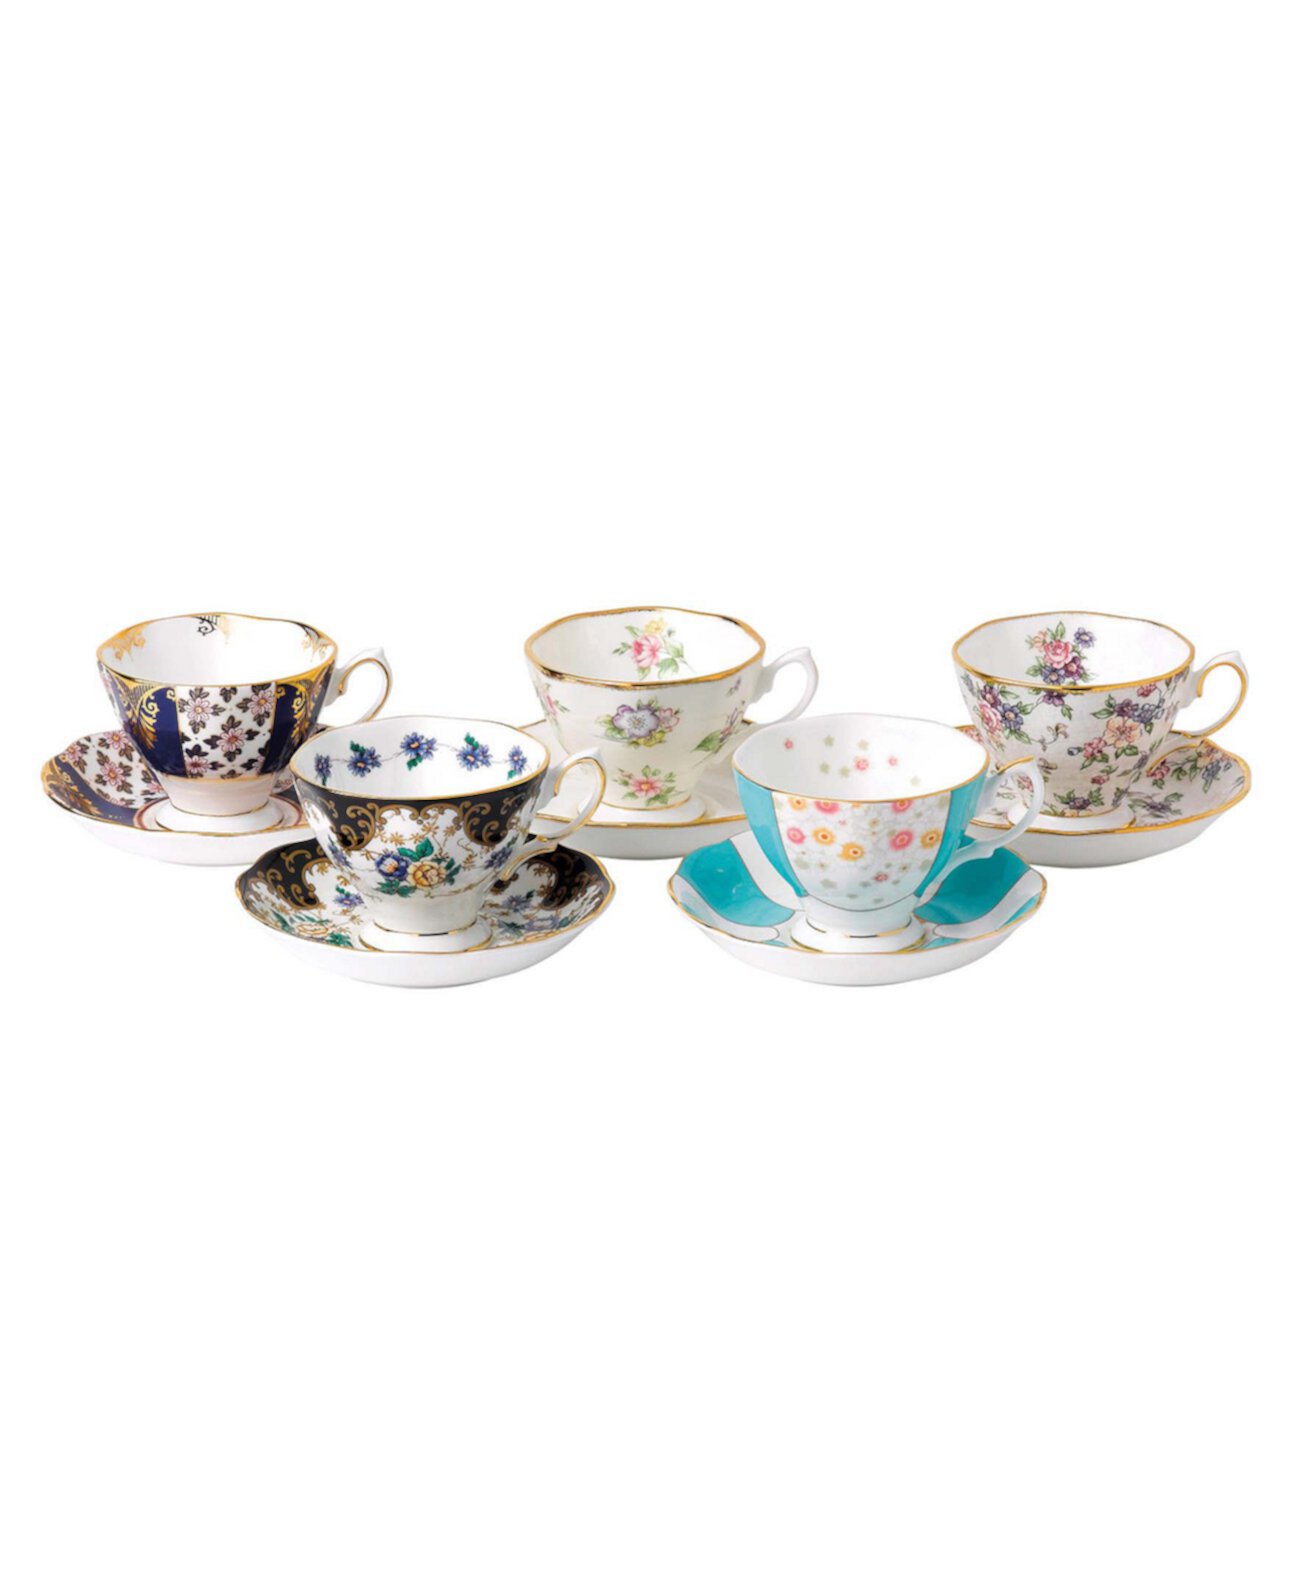 Набор чашки и блюдца из 5 предметов 100 Years 1900-1940 Royal Albert